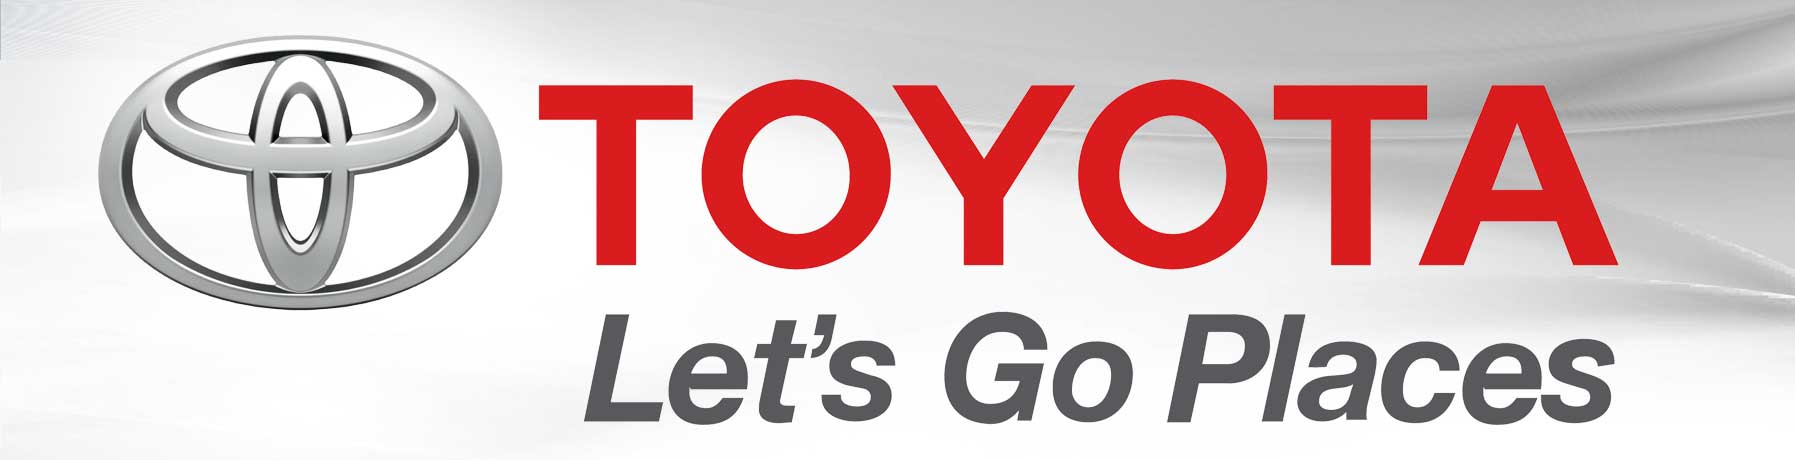 We service Toyota Vehicles